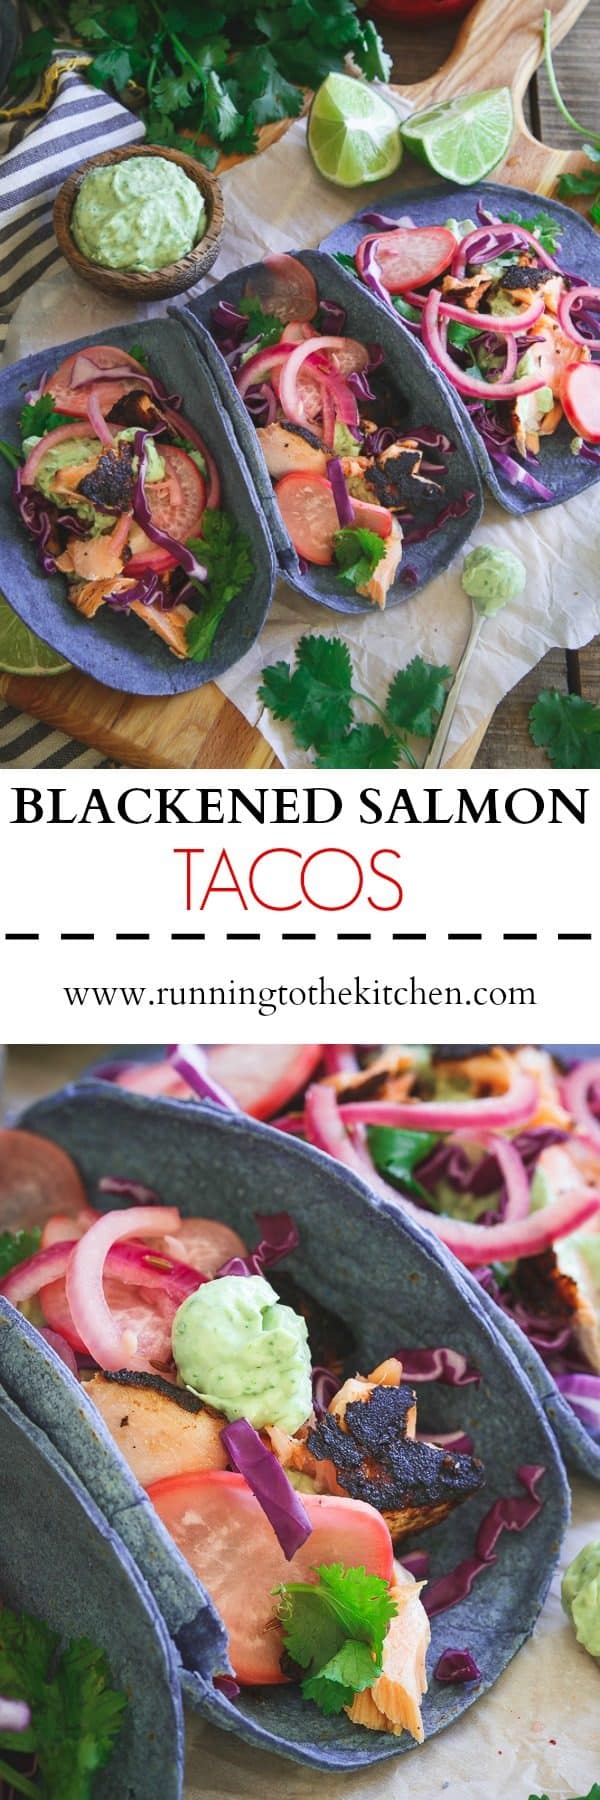 Blackened Salmon Tacos